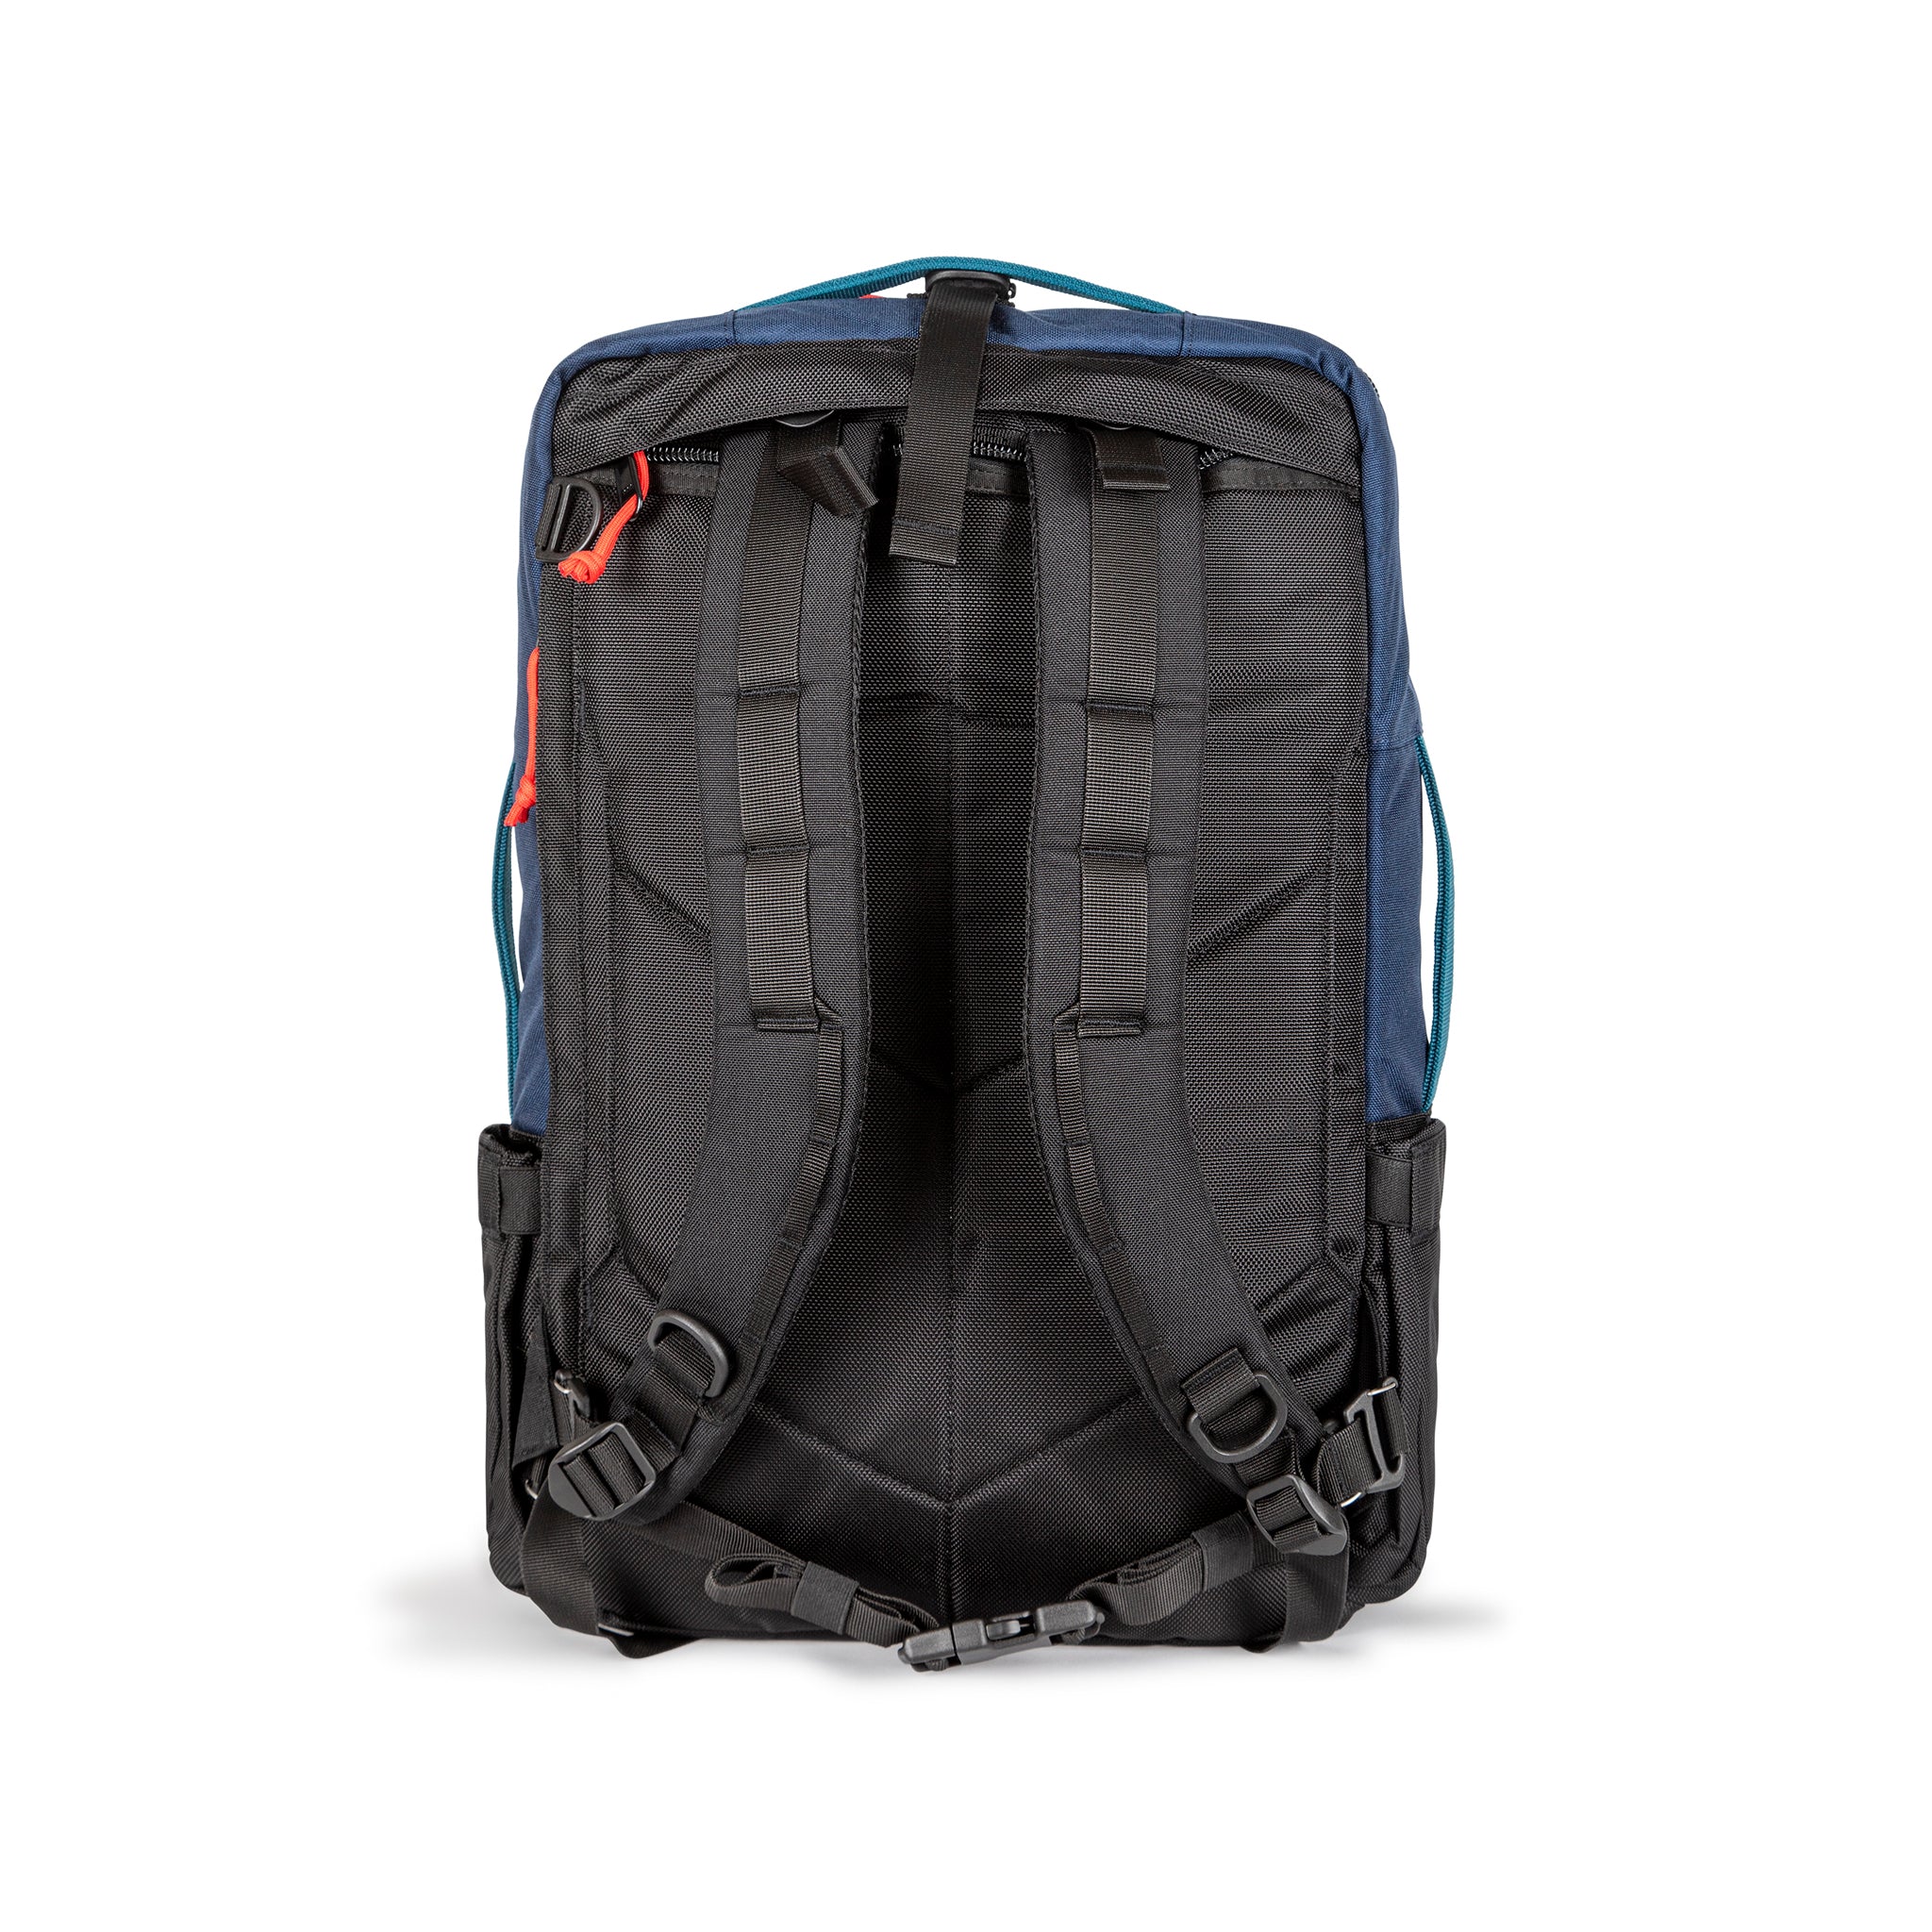 Backpacks, Travel & Duffel Bags for Women